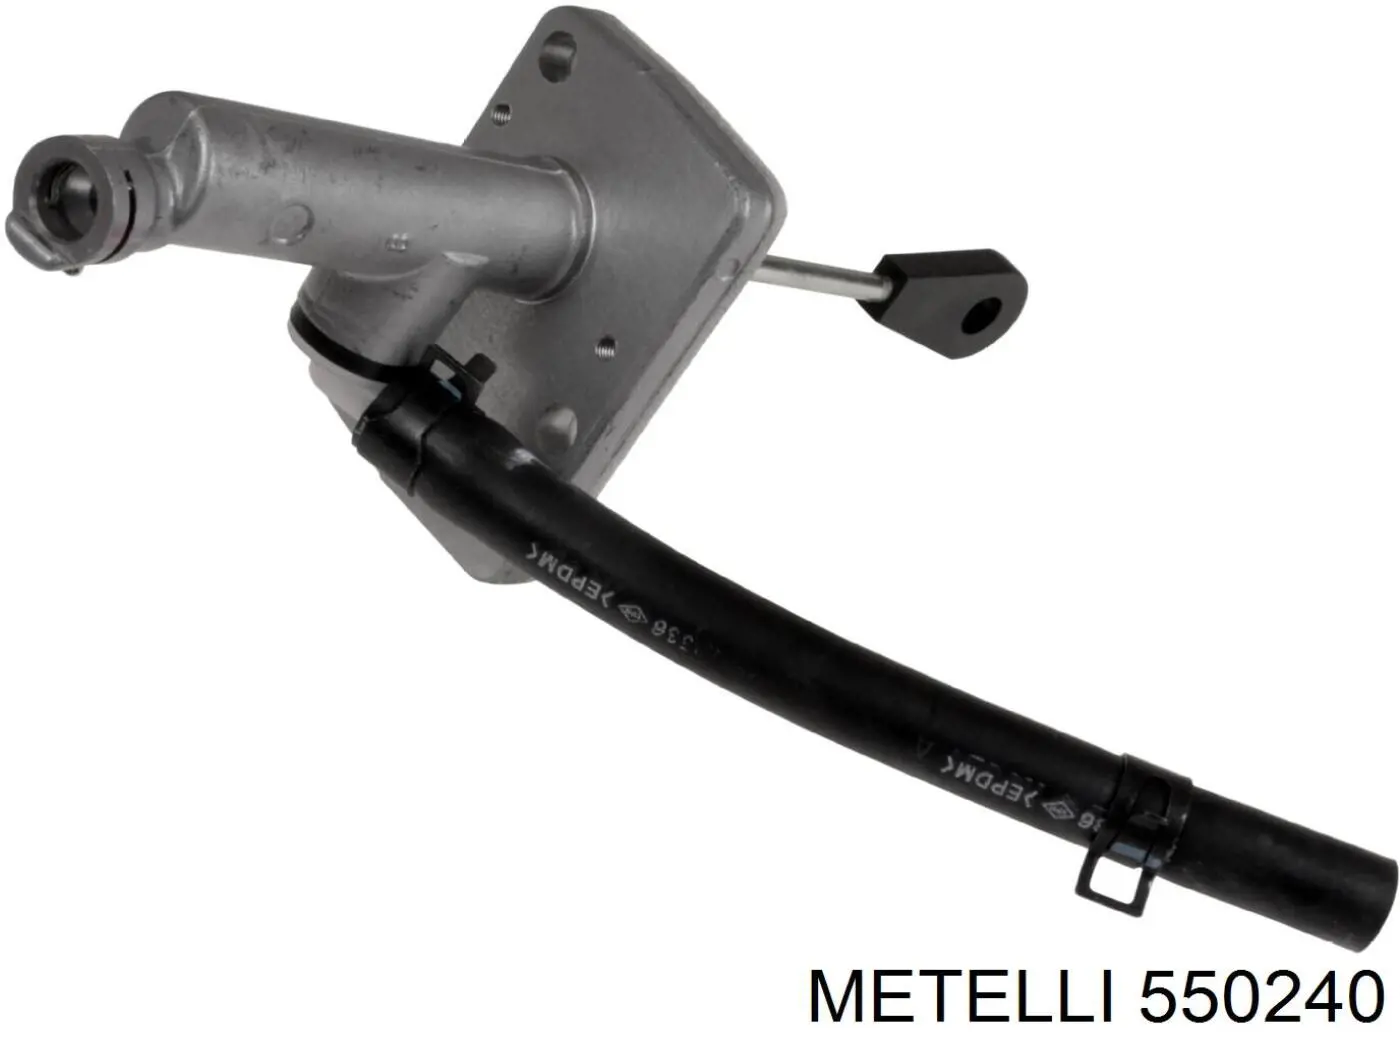 55-0240 Metelli cilindro maestro de embrague